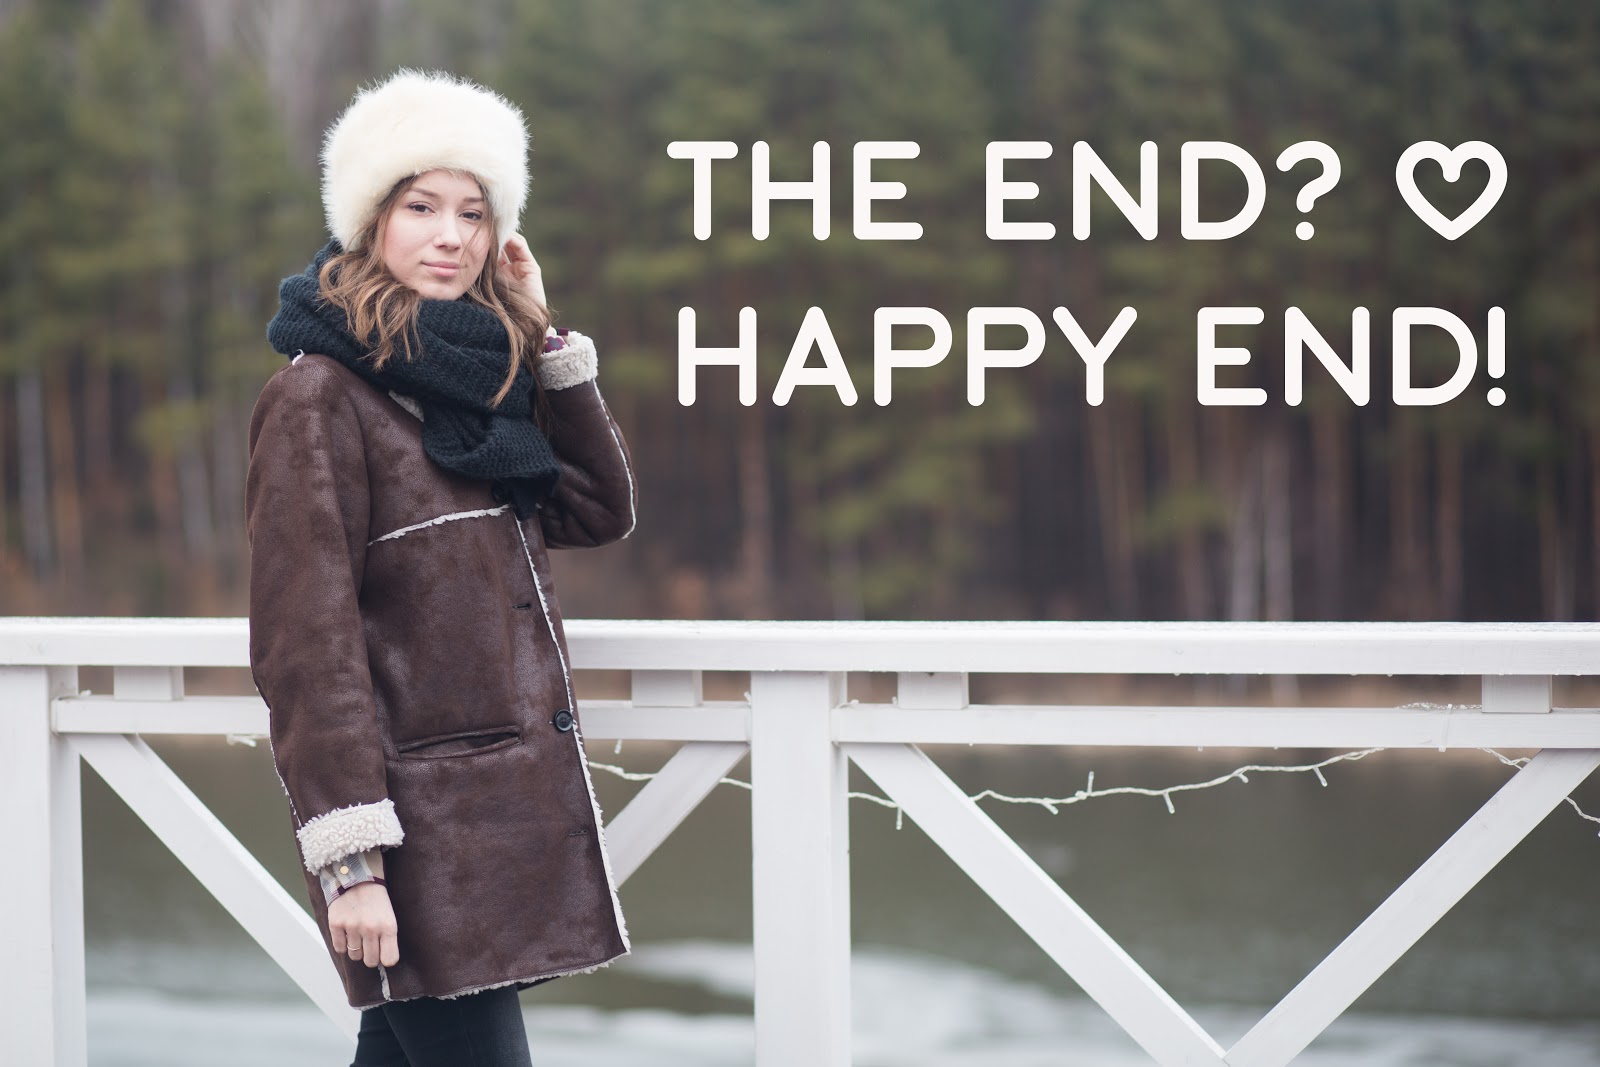 Happy end! 